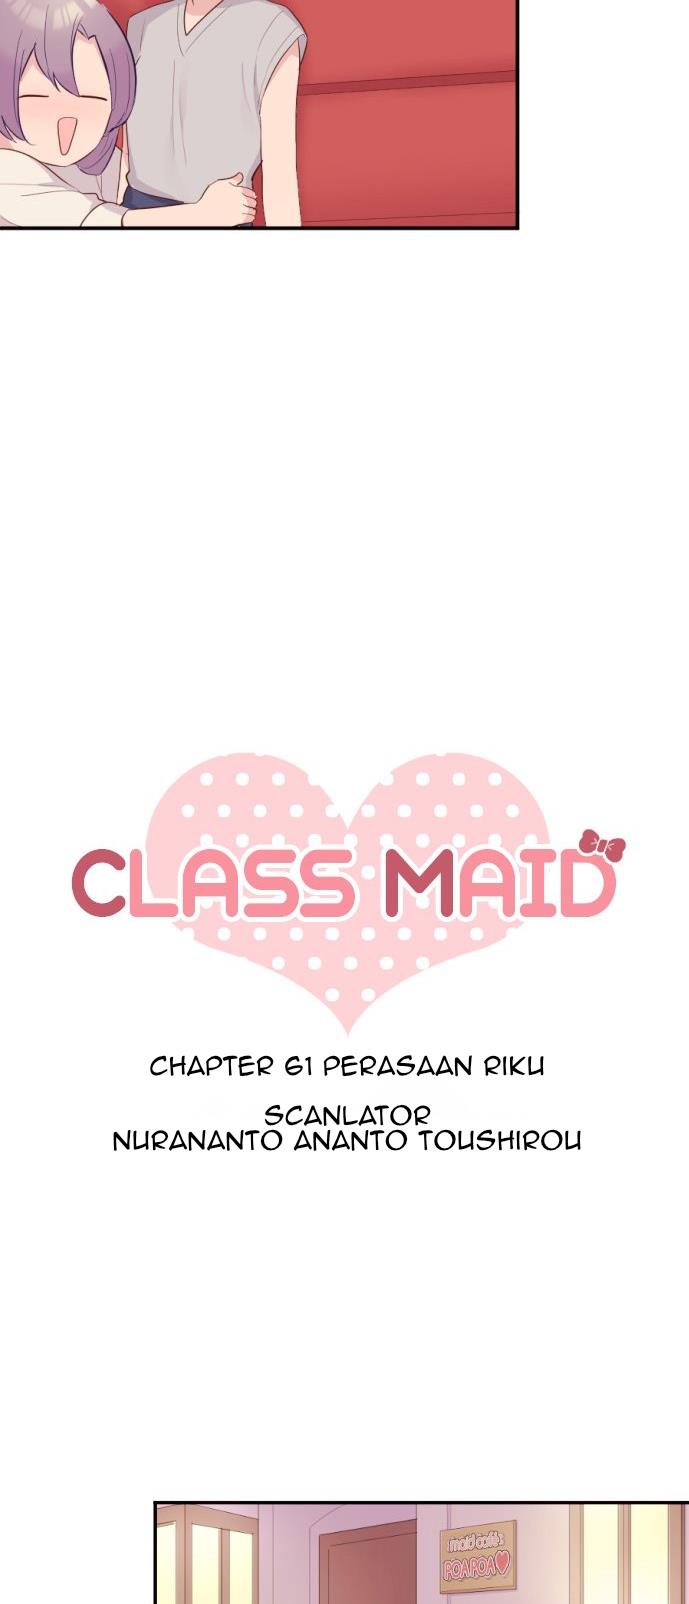 Class Maid (Shimamura) Chapter 61